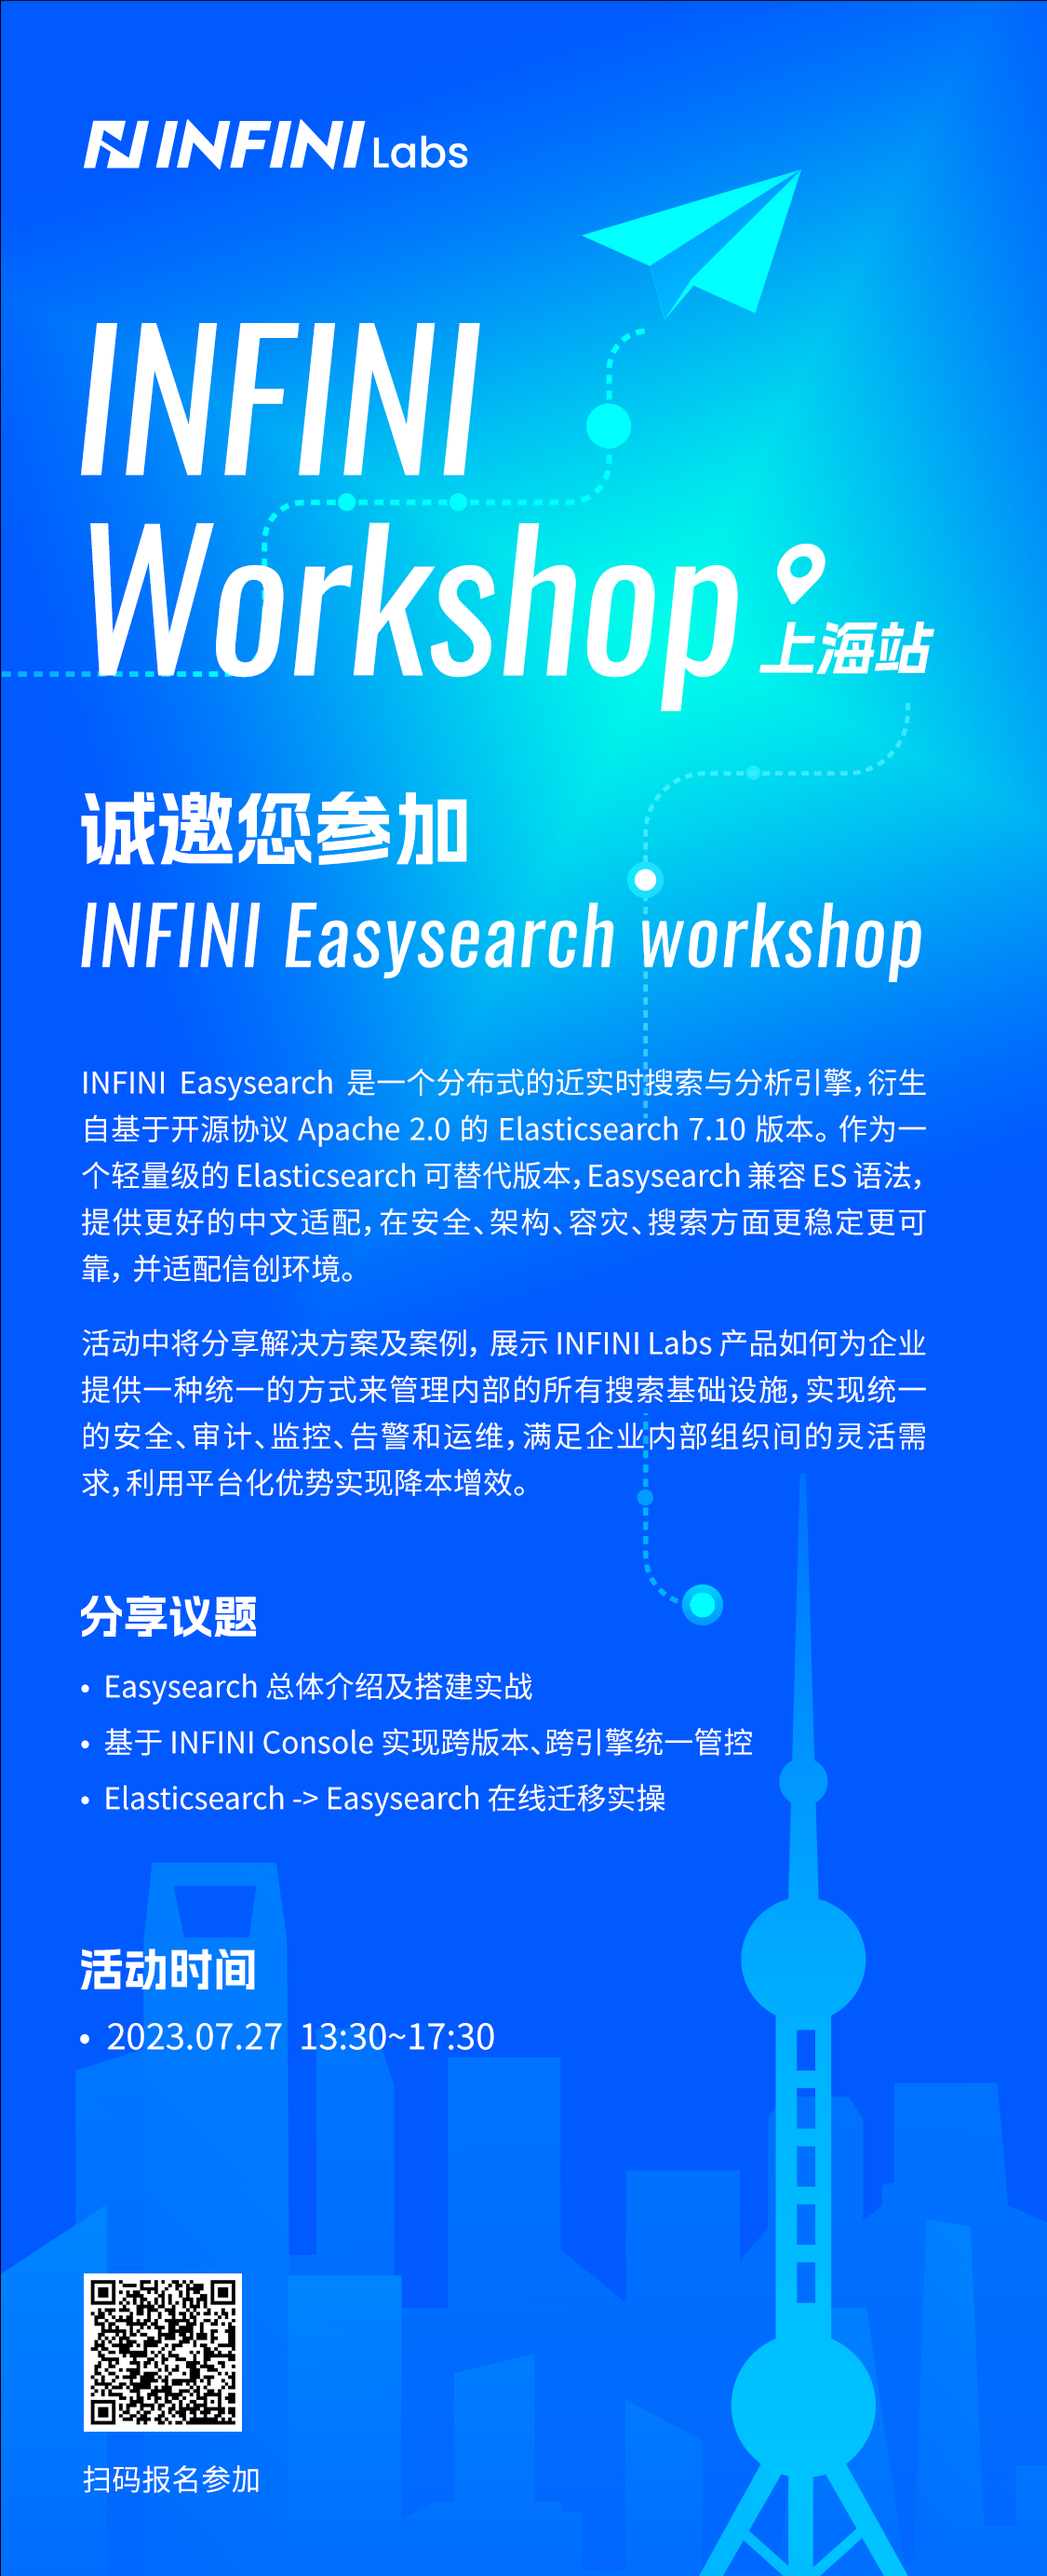 【 INFINI Workshop 上海站】7 月 27 日一起动手实验玩转 Easysearch